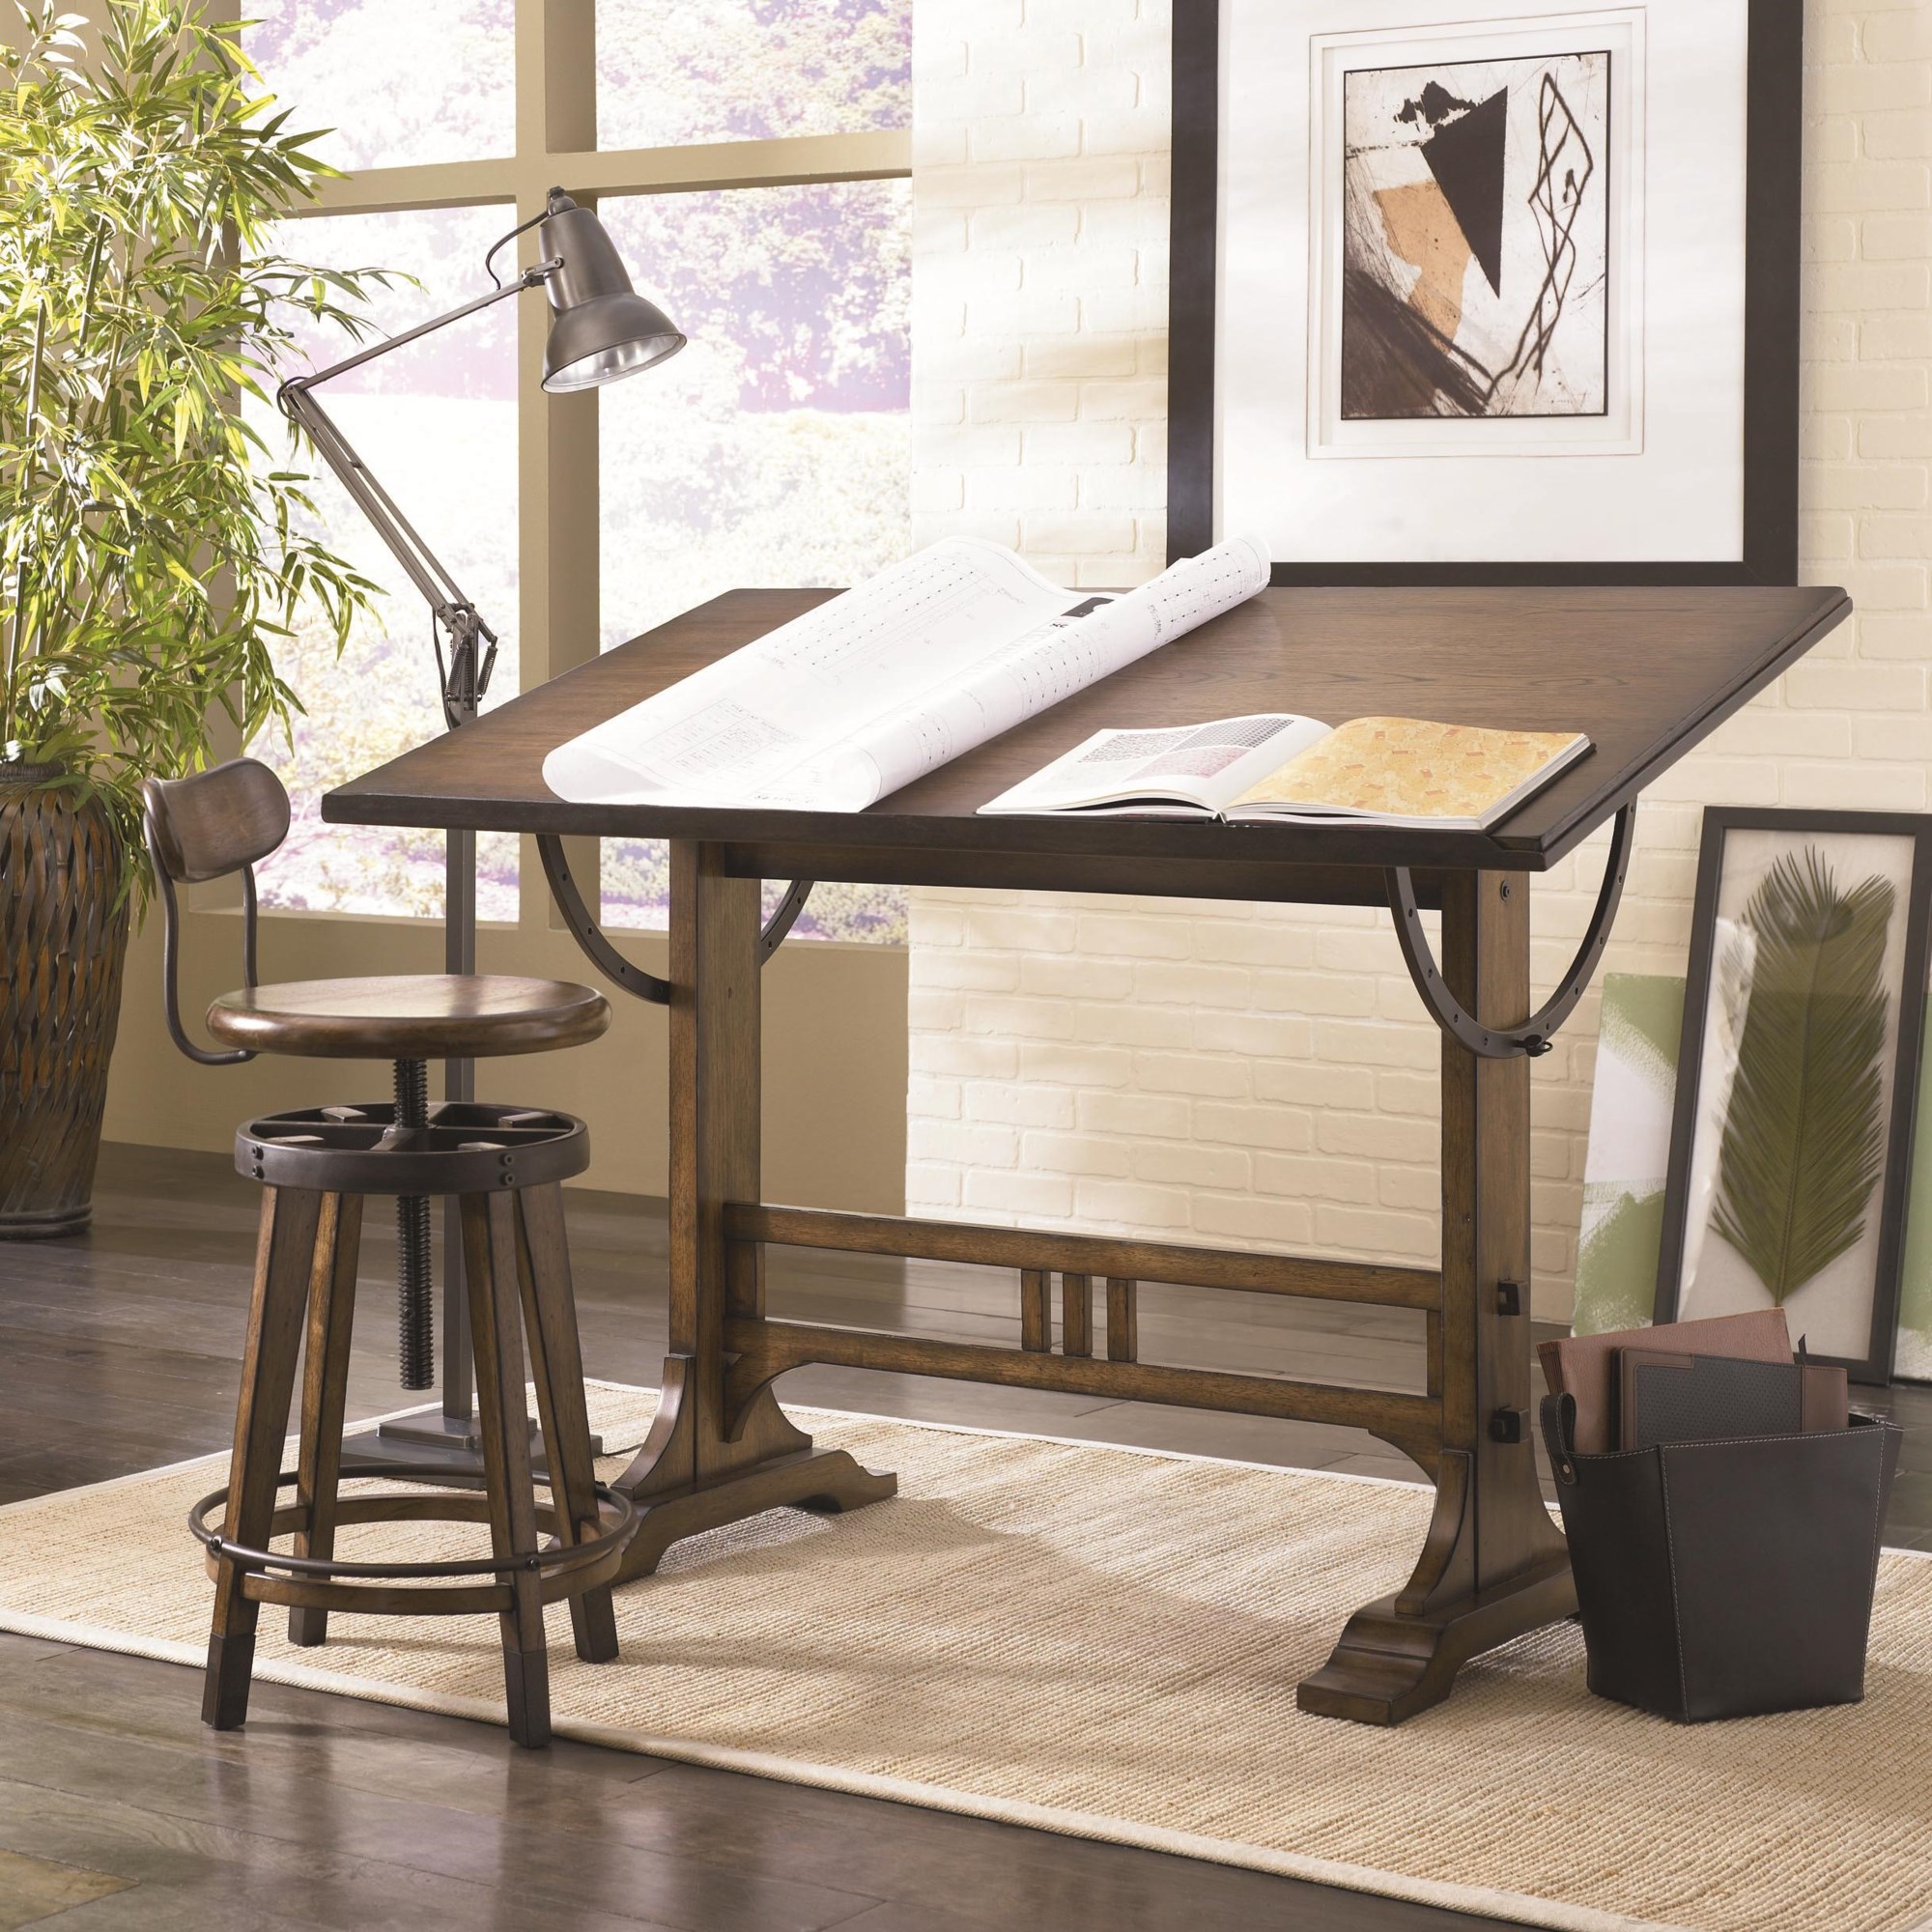 Hammary Studio Home Table Mission Desk Architect Furniture 166-940 Desk | Oak & Weathered Desks Mattress | - Wayside